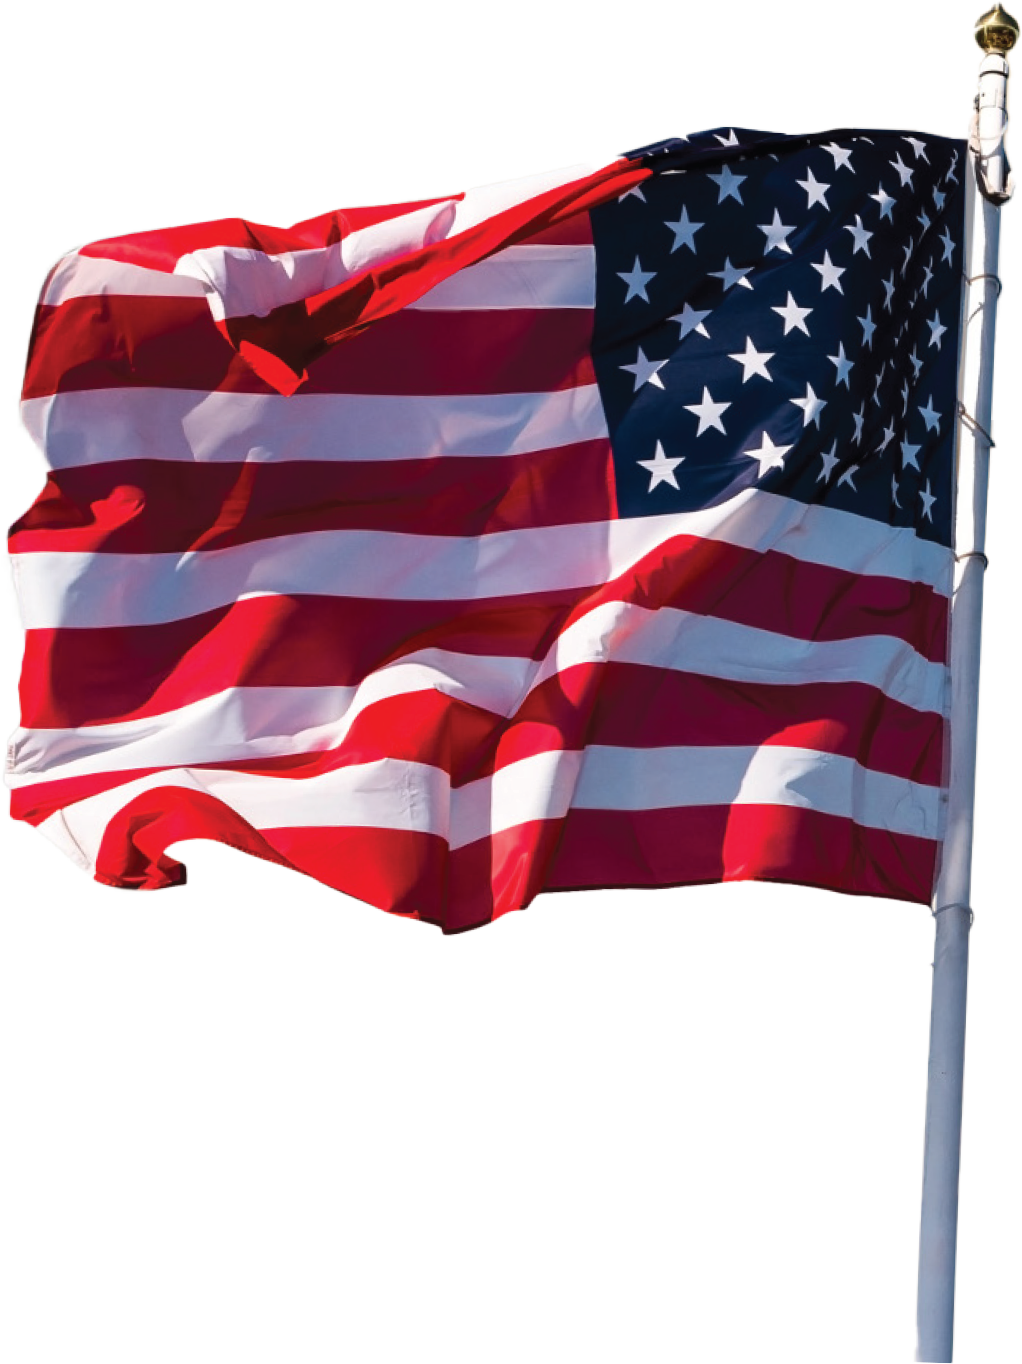 photo of American flag waving